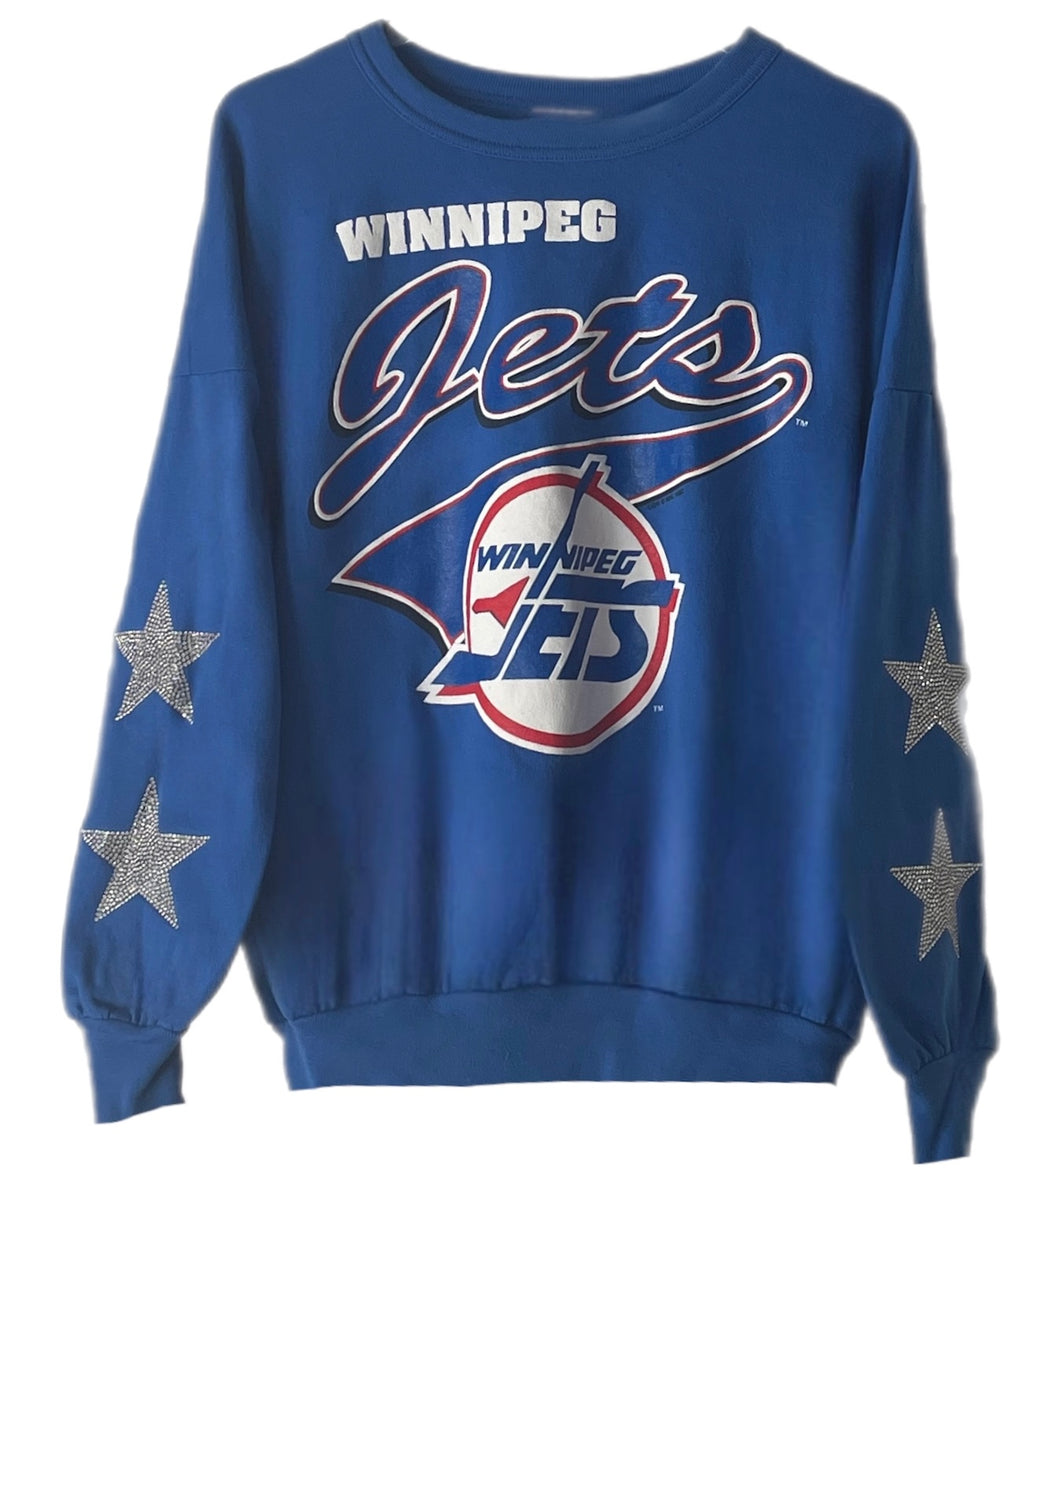 Winnipeg Jets, NHL “Rare Find” One of a KIND Vintage Sweatshirt with Crystal Star Design